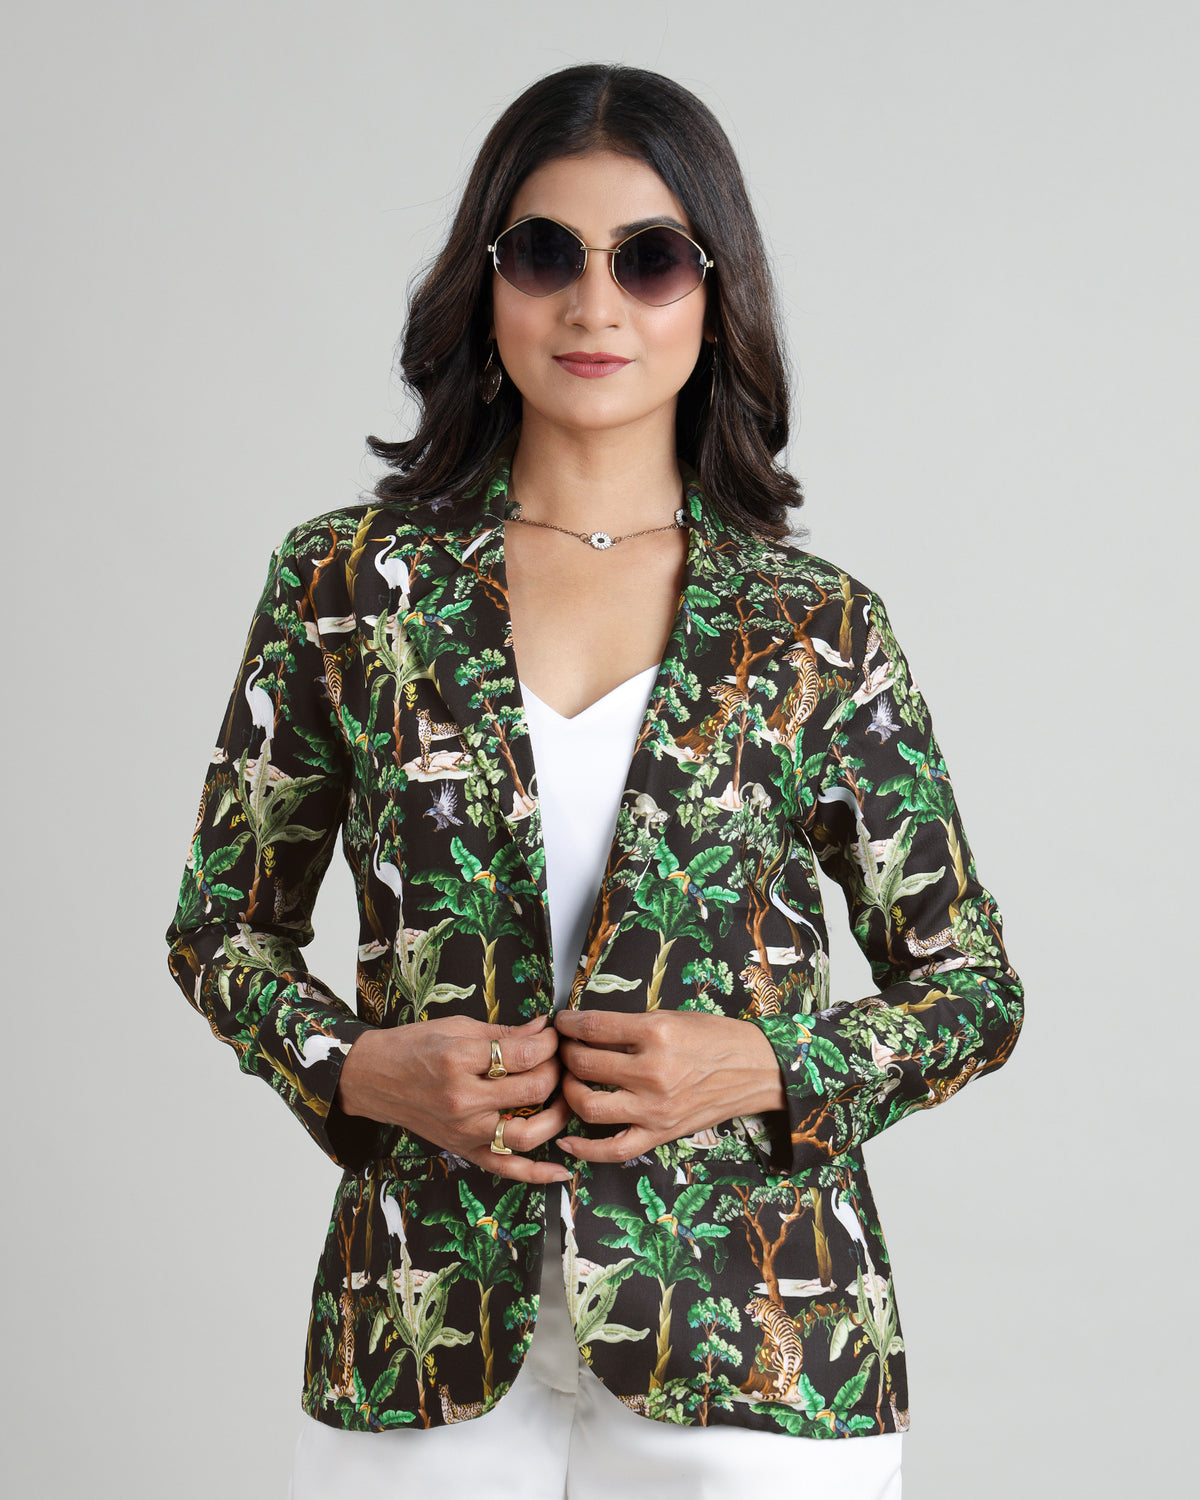 Jackets For Women - Buy Women Fashion Jackets Online at Best